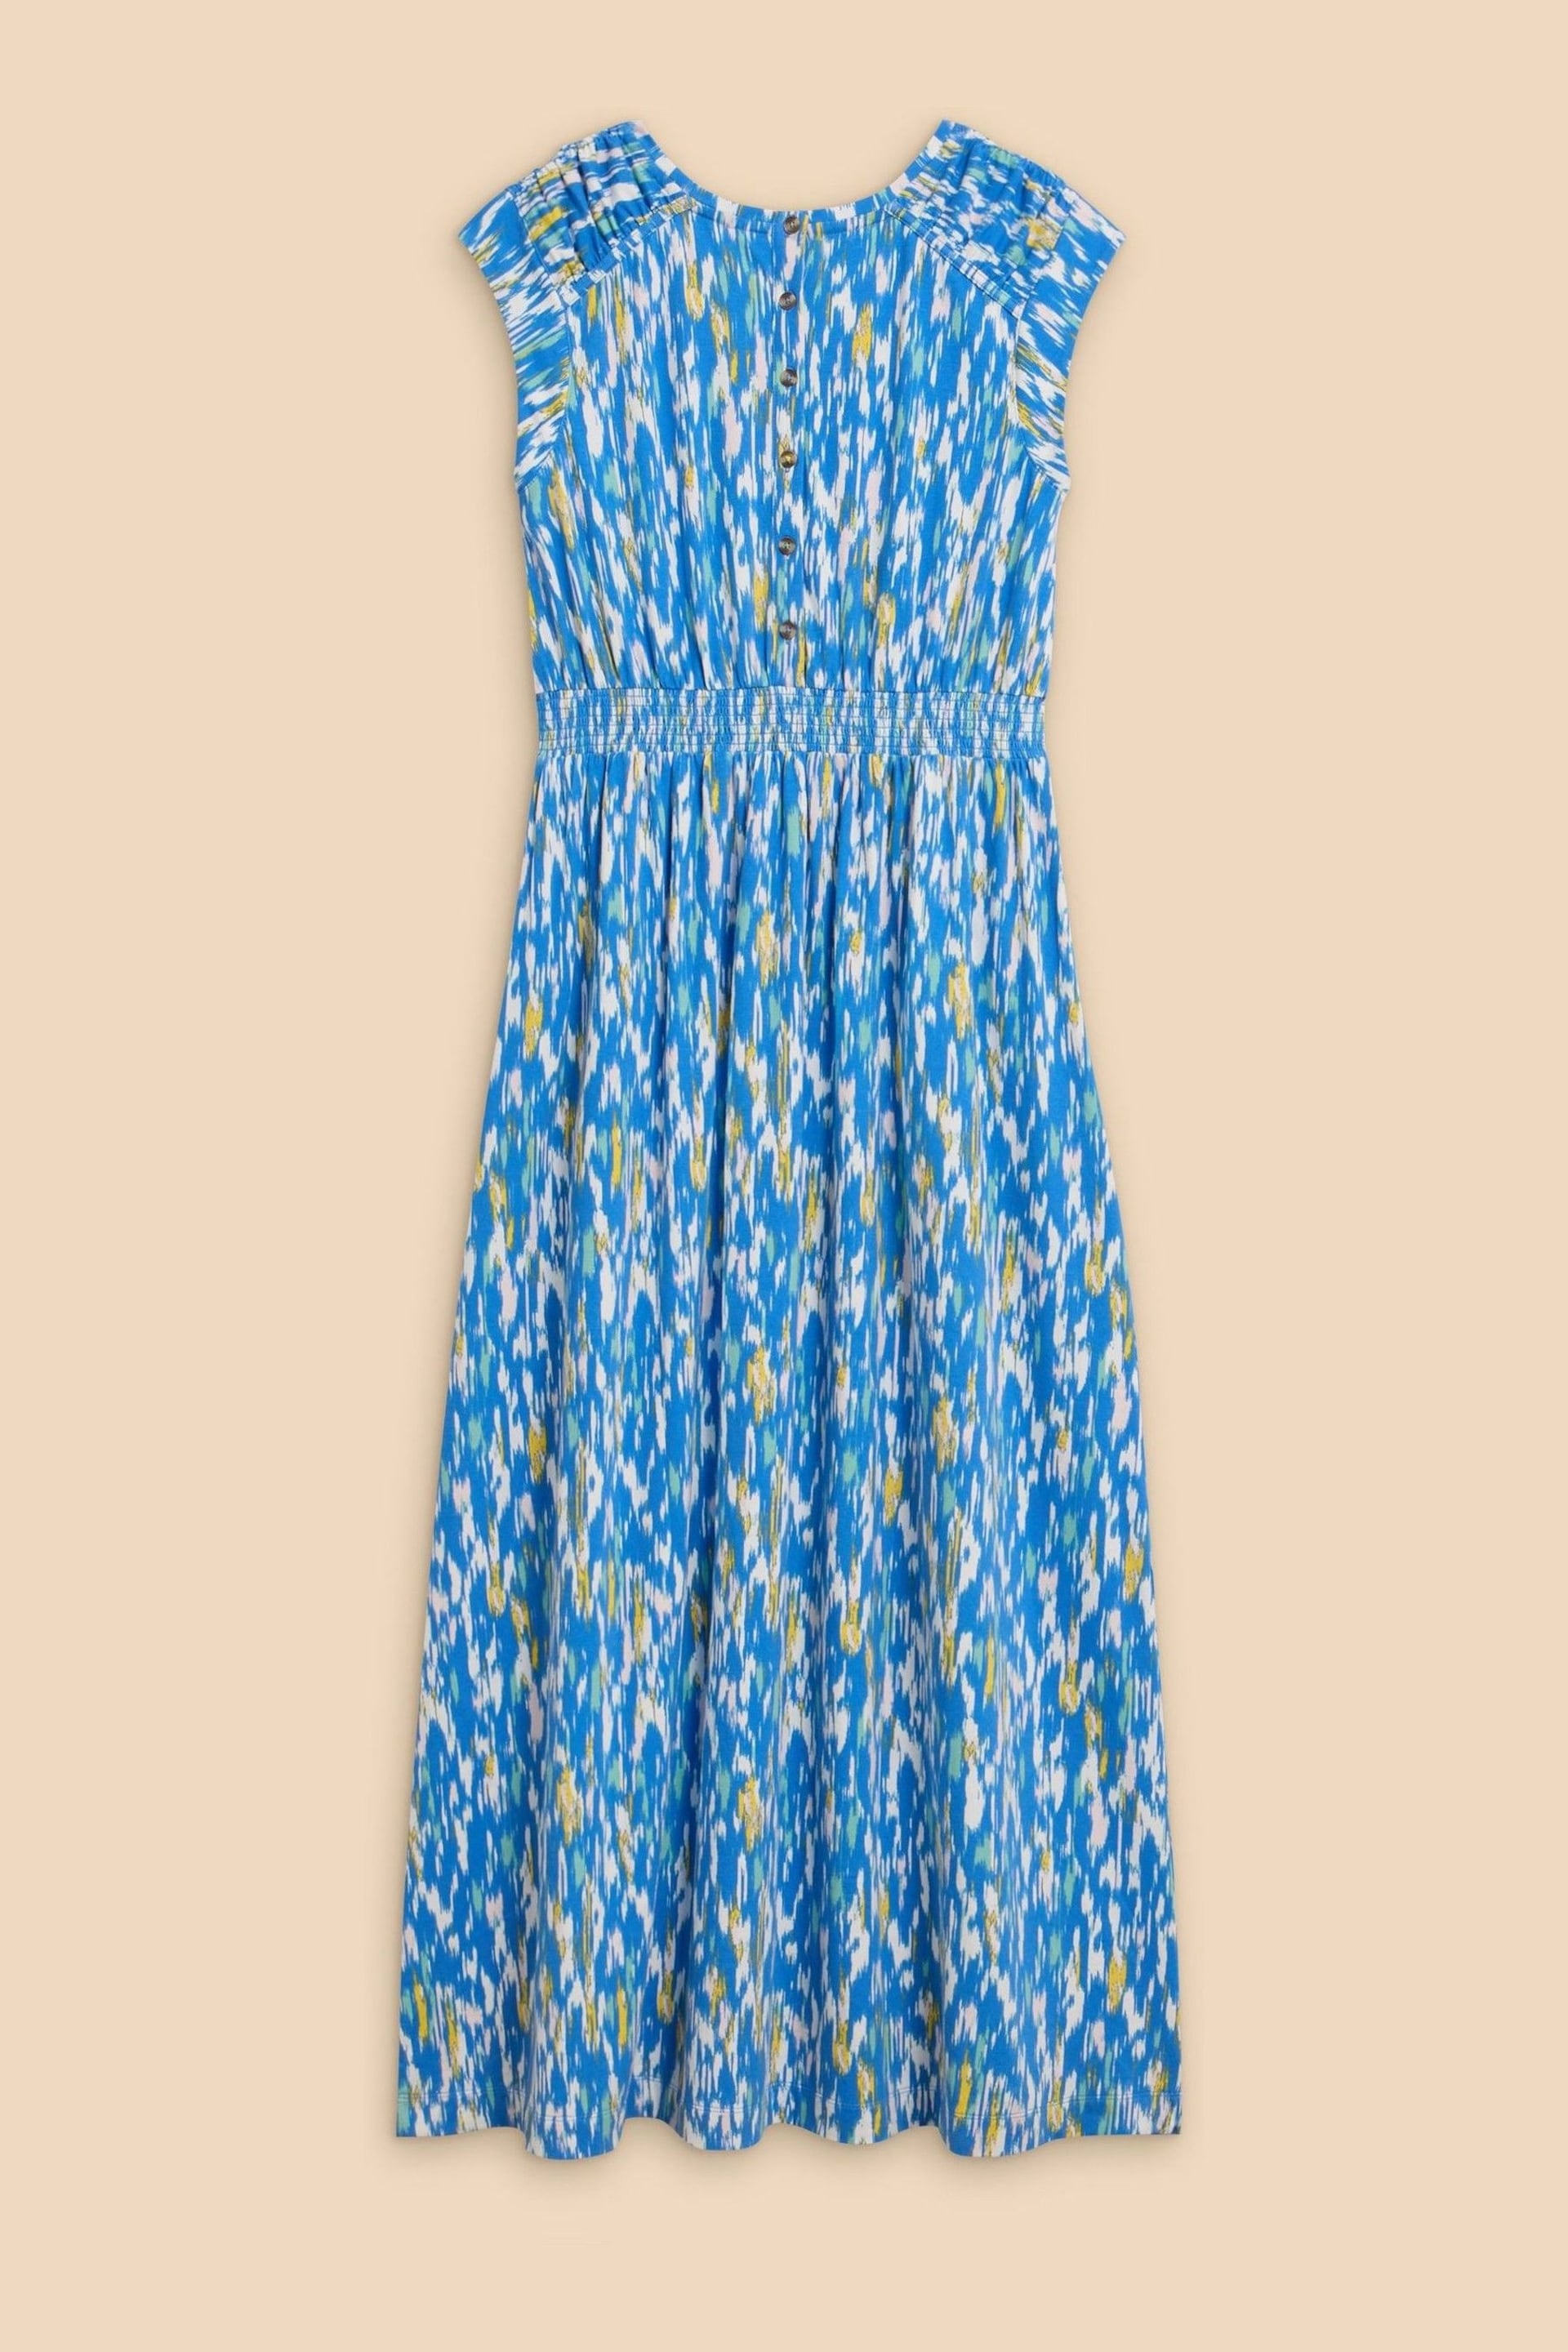 White Stuff Blue Darcie Jersey Maxi Dress - Image 6 of 7